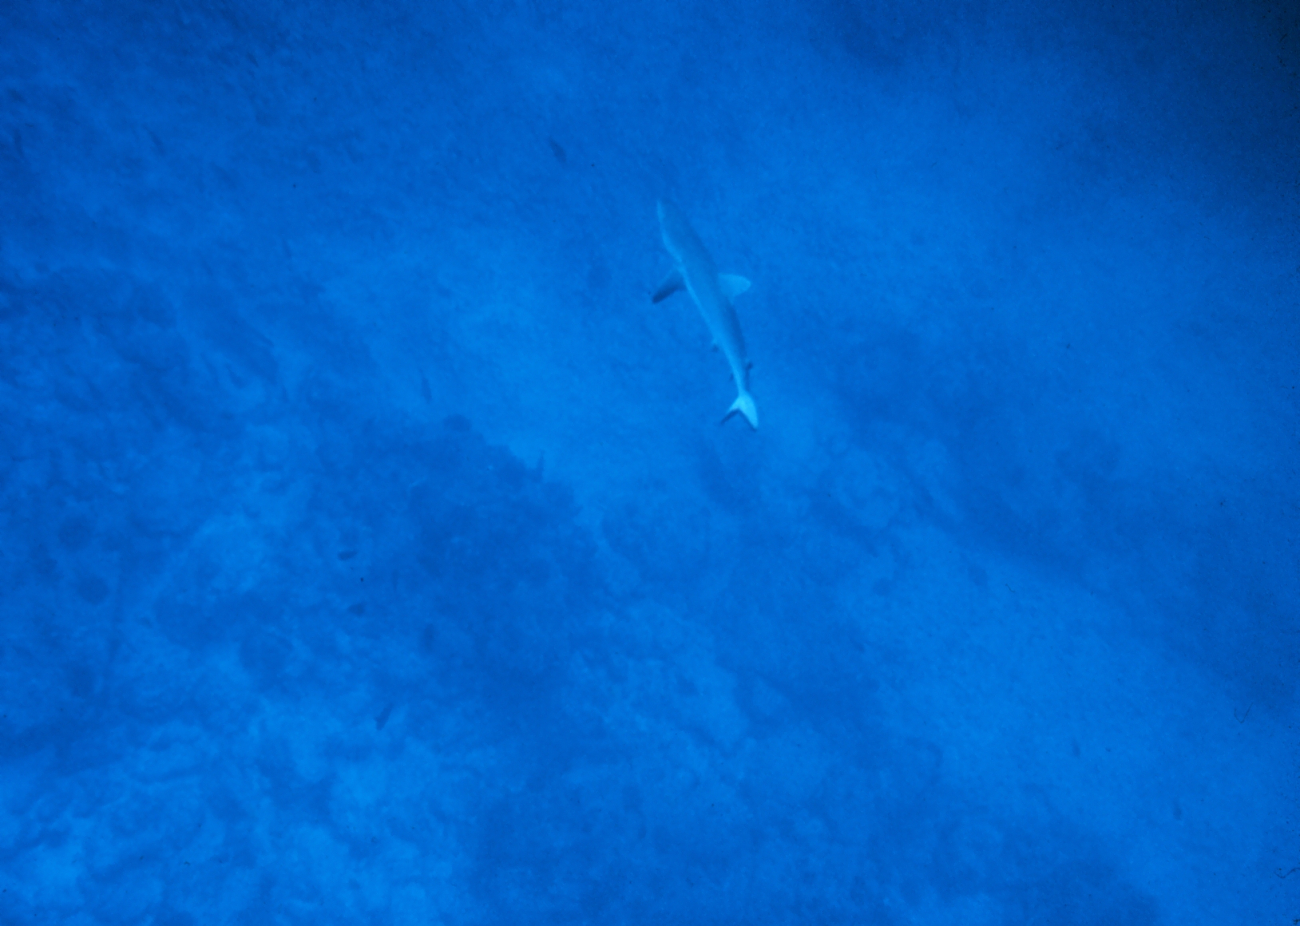 Large shark swimming far below